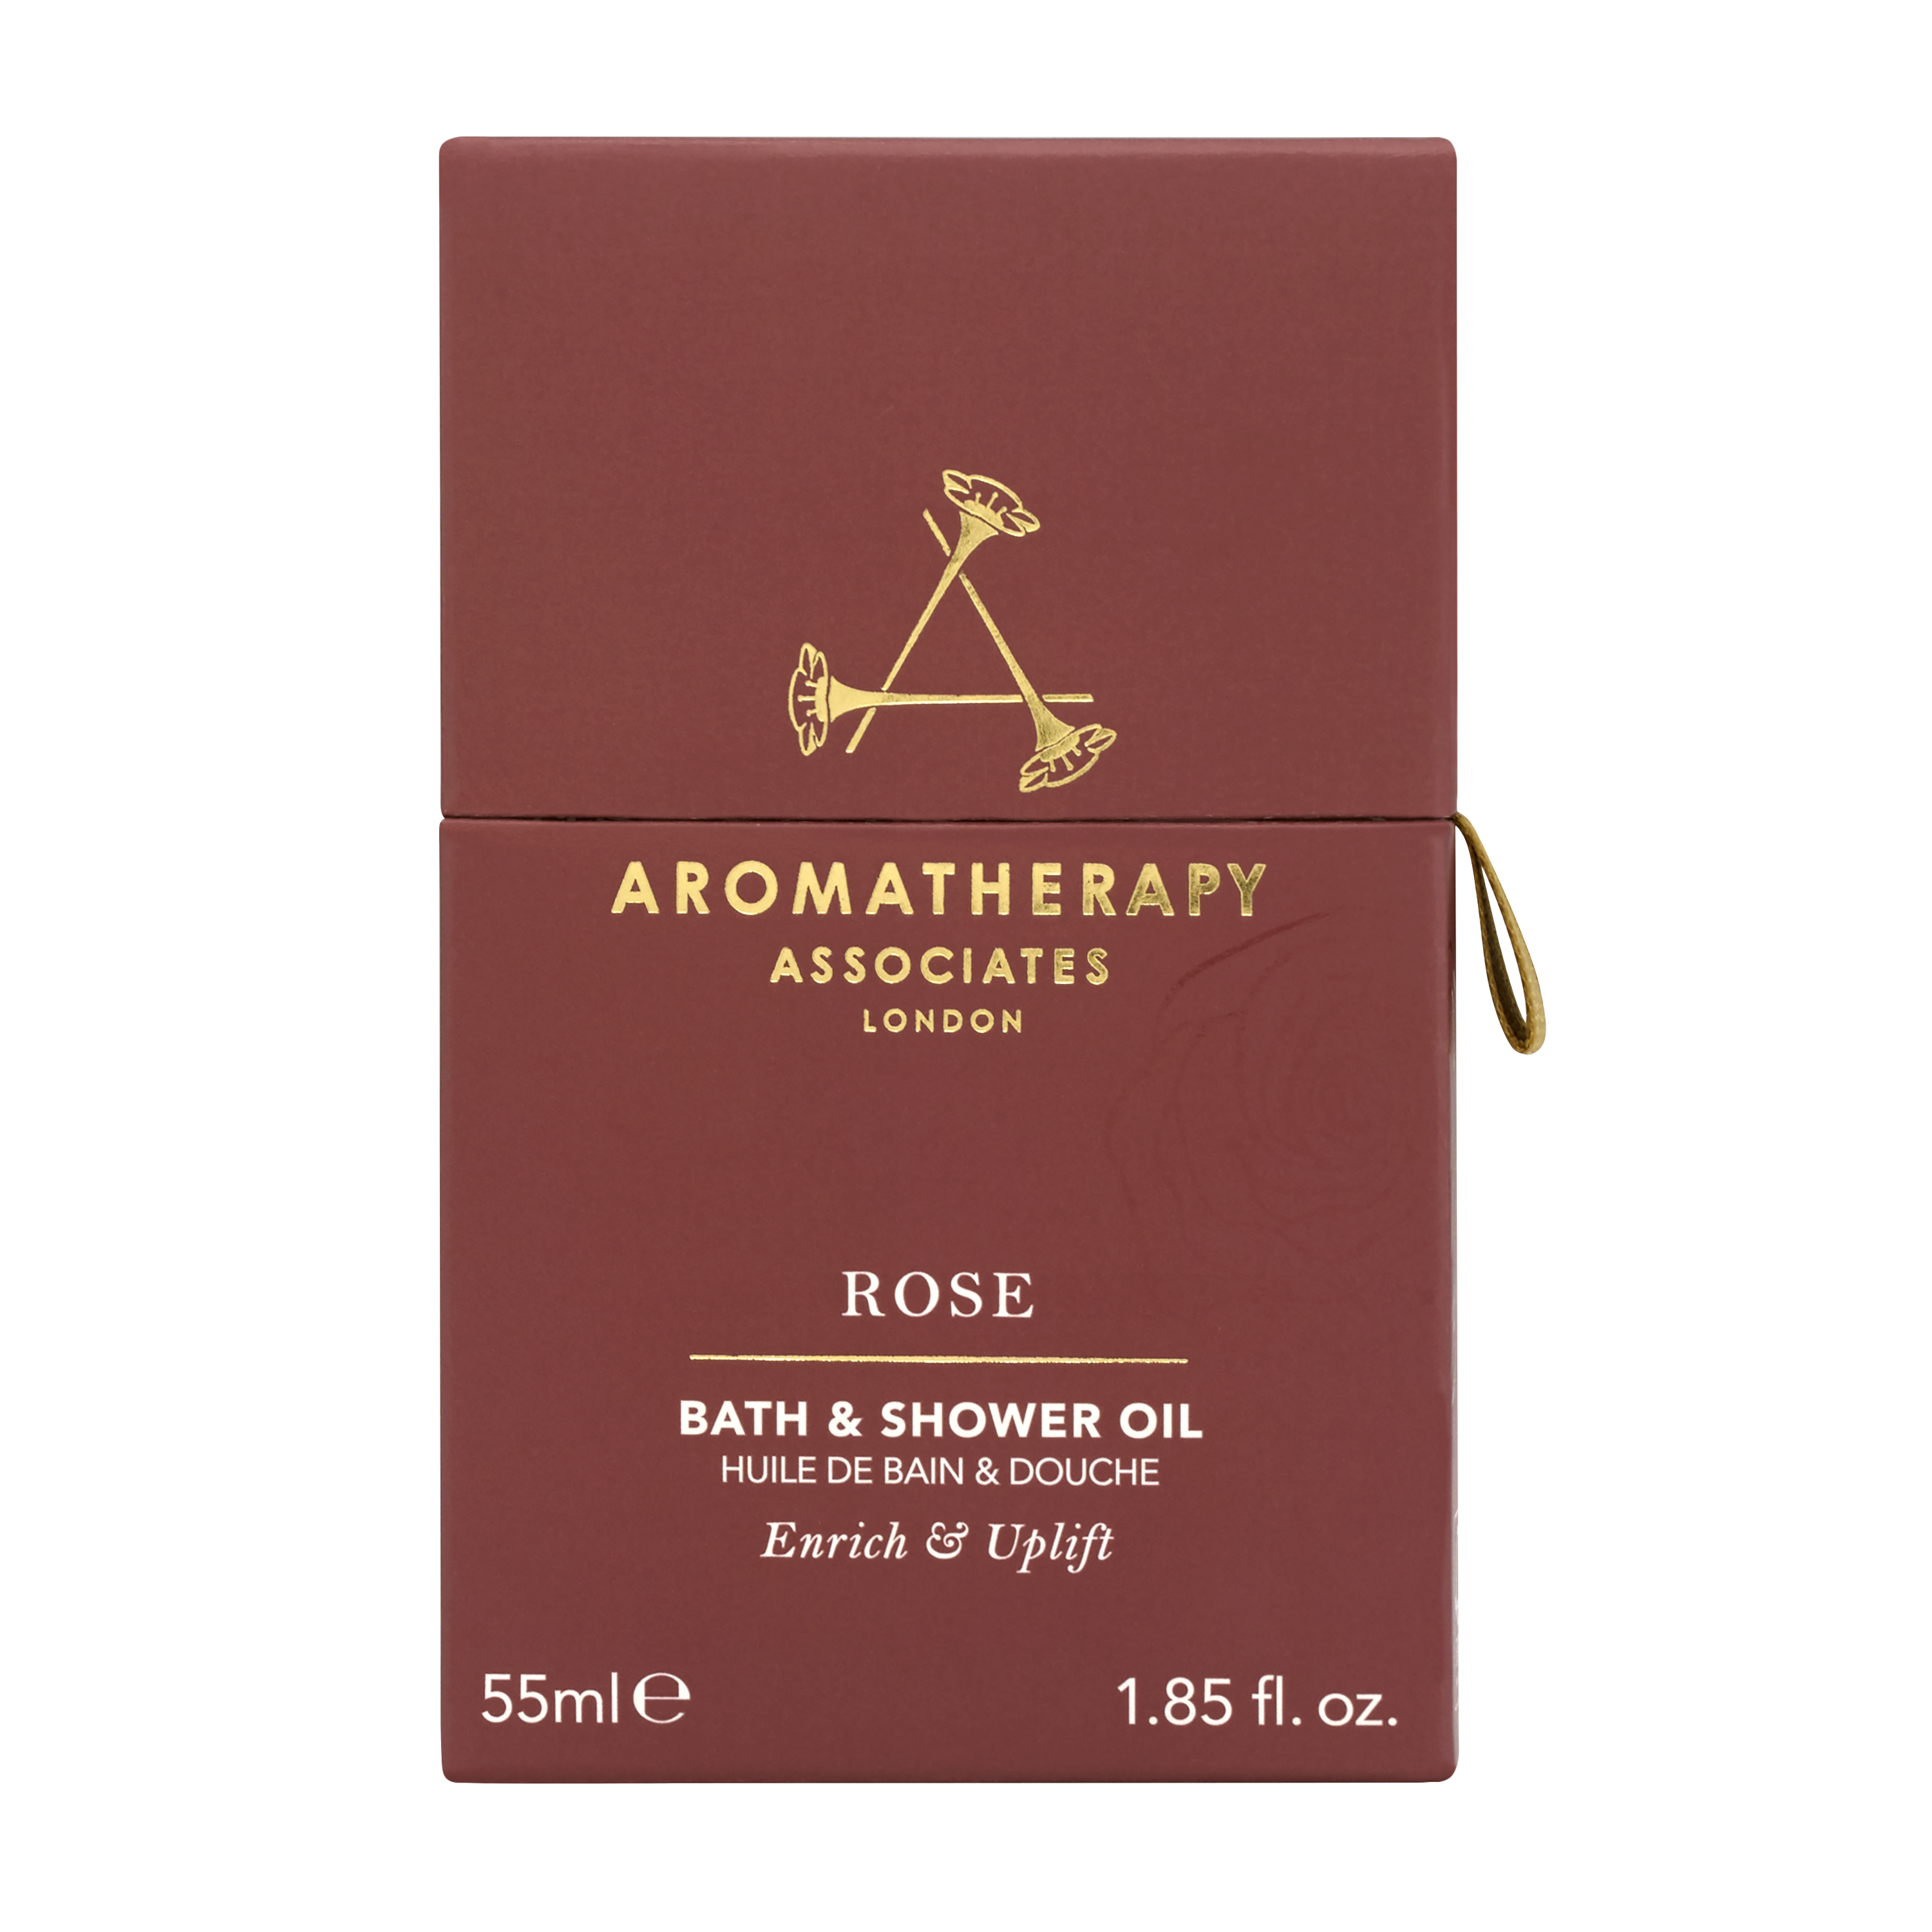 Rose Bath & Shower Oil 55ml by Aromatherapy Associates